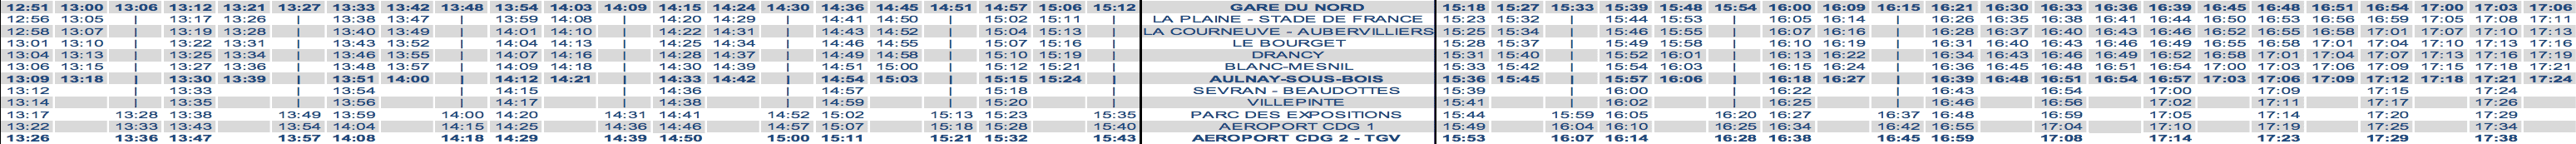 RER B Train Timetable Paris to CDG Afternoon Weekday Strike 2020